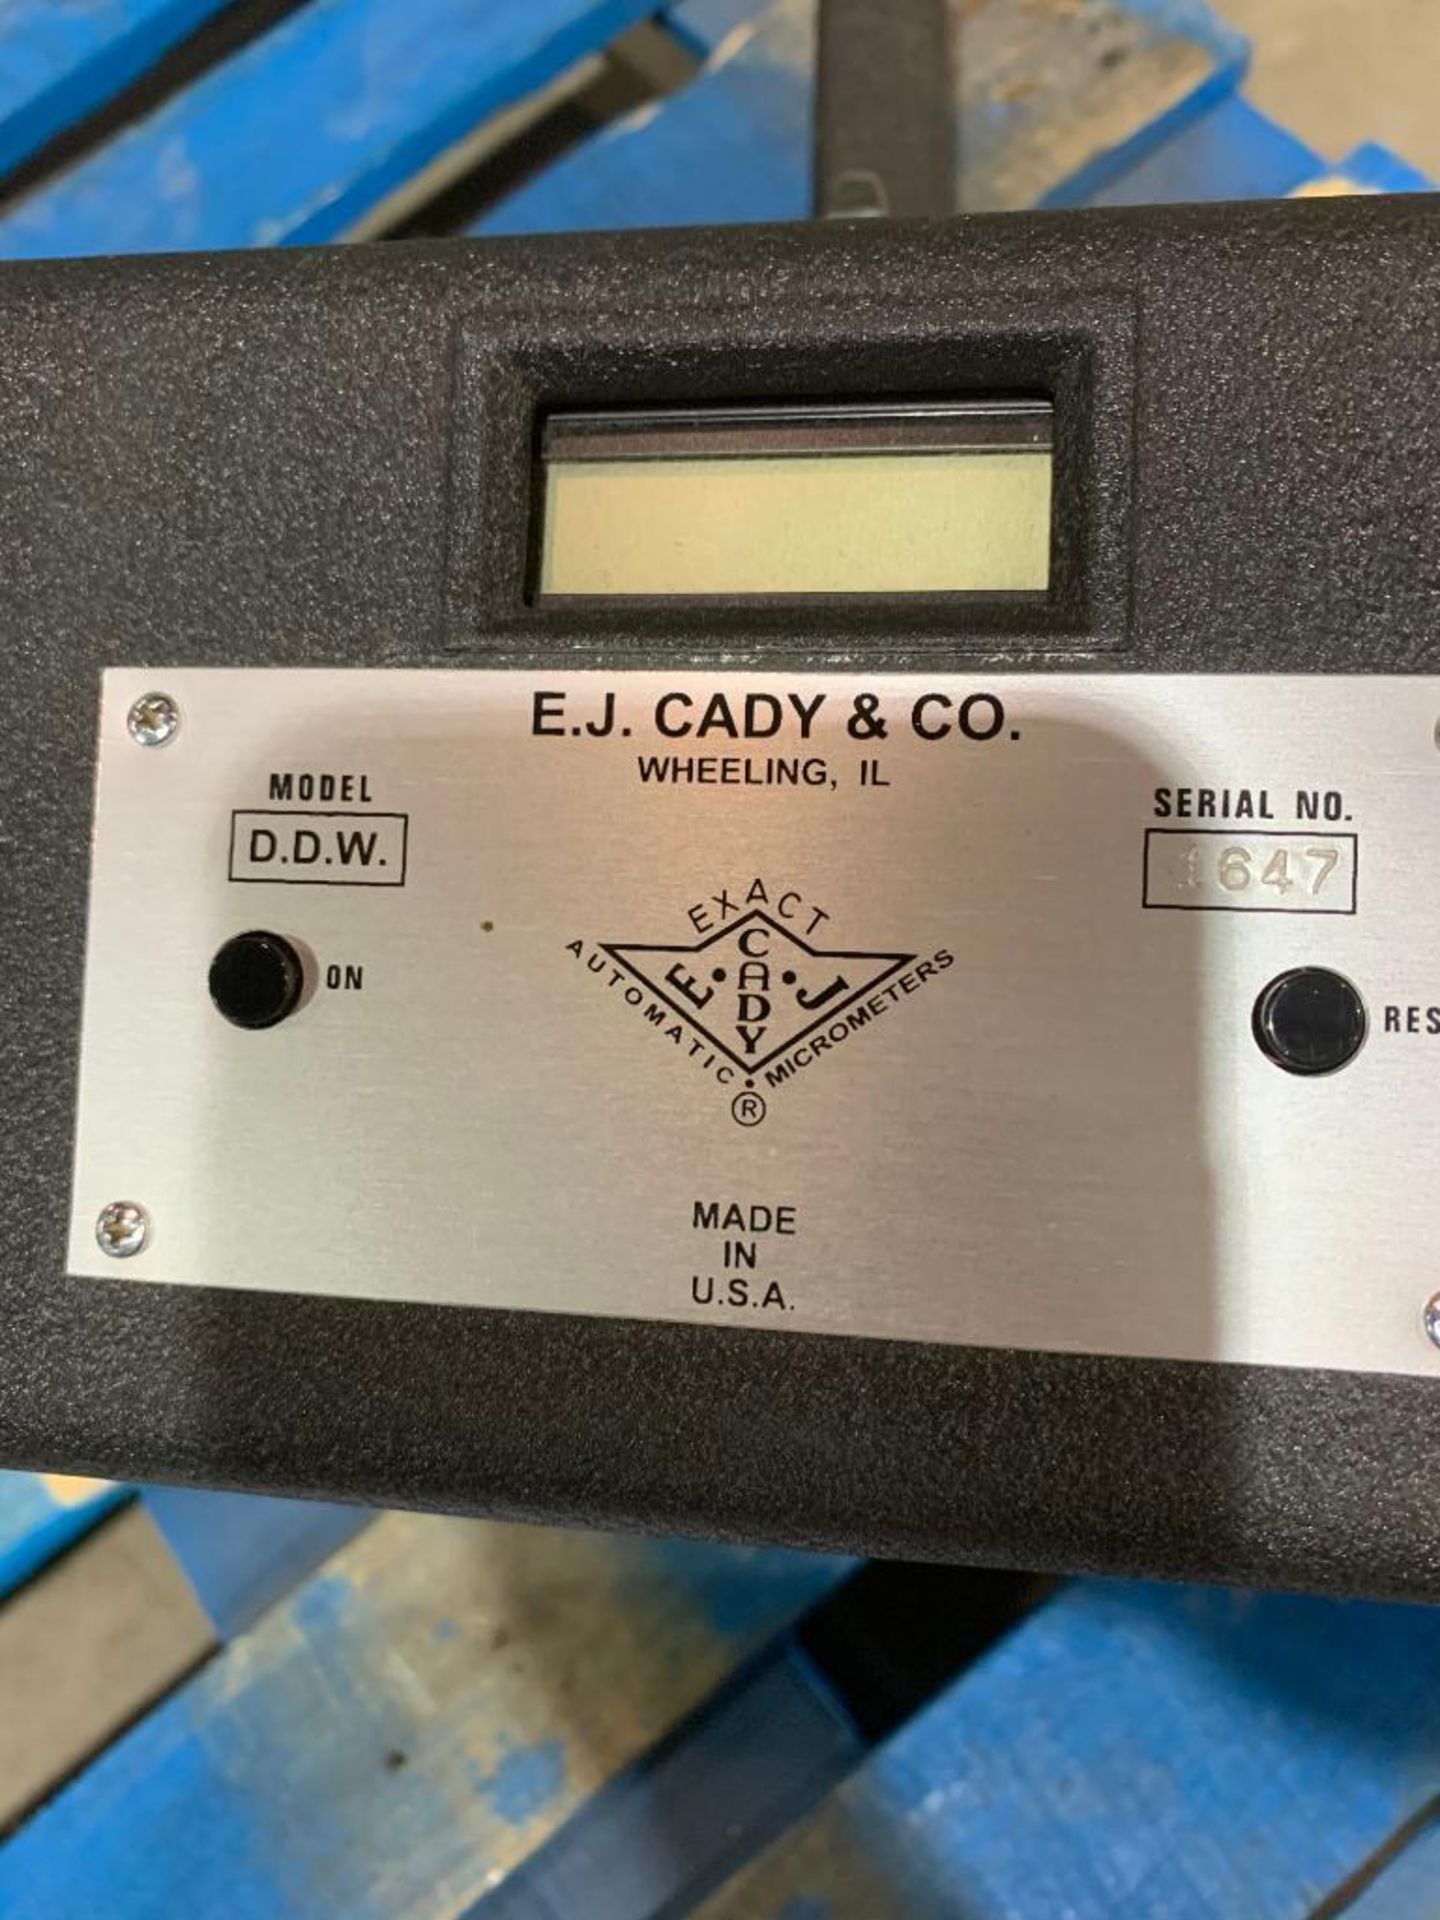 E.J. Cady & Co. micrometer, model DDW